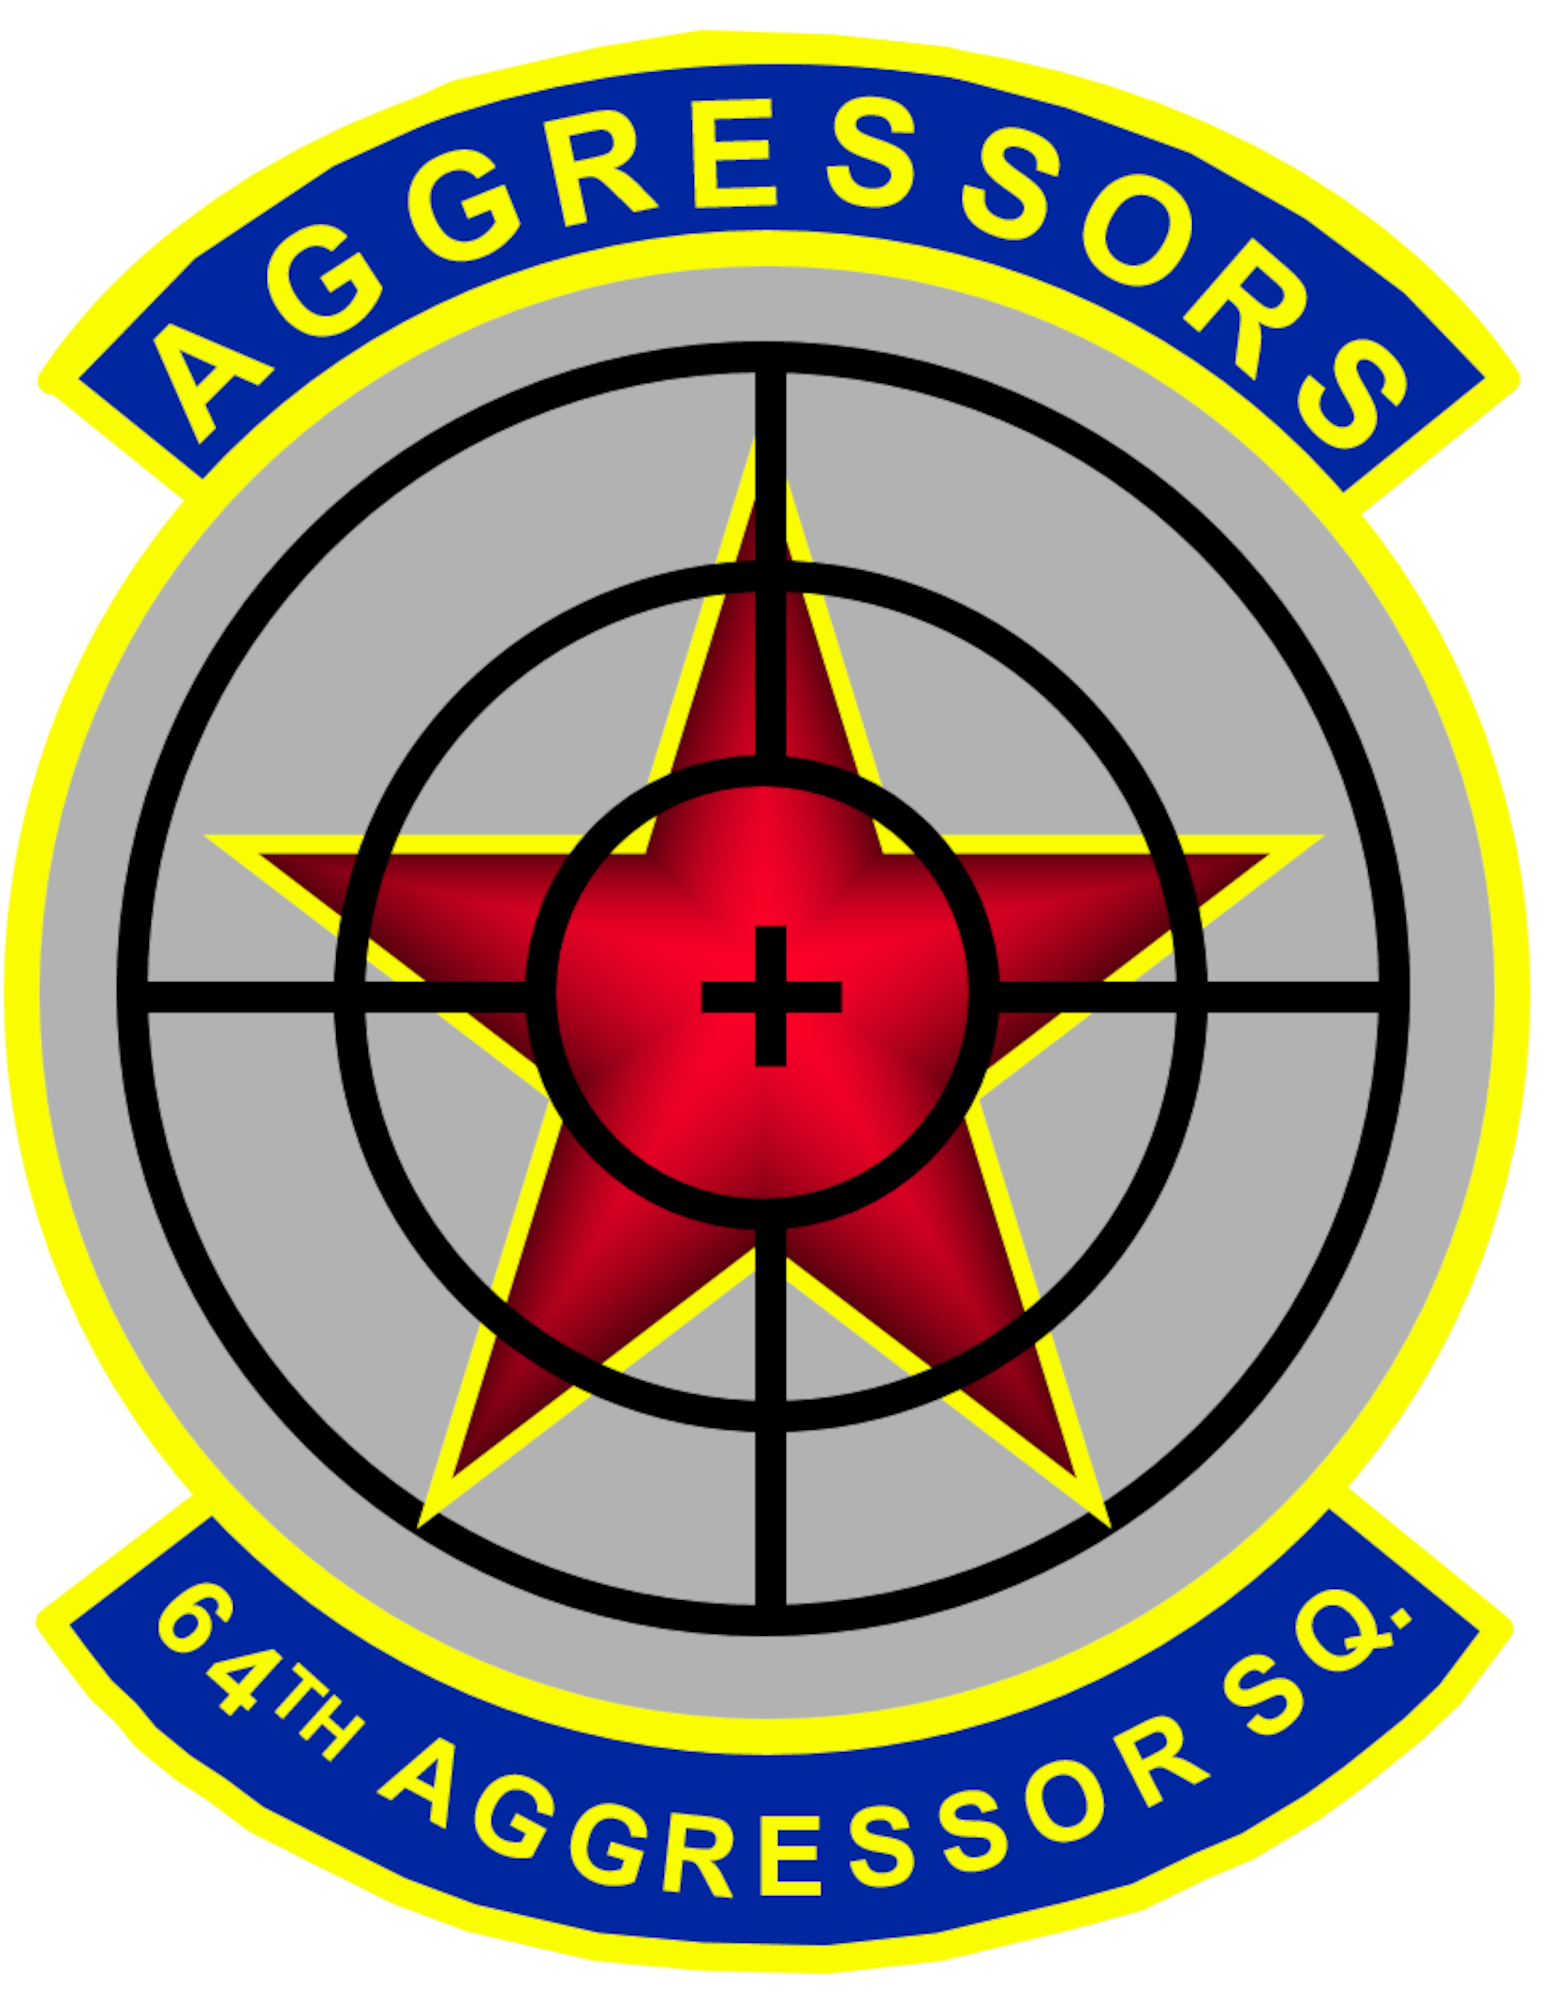 64th Aggressors Squadron Patch